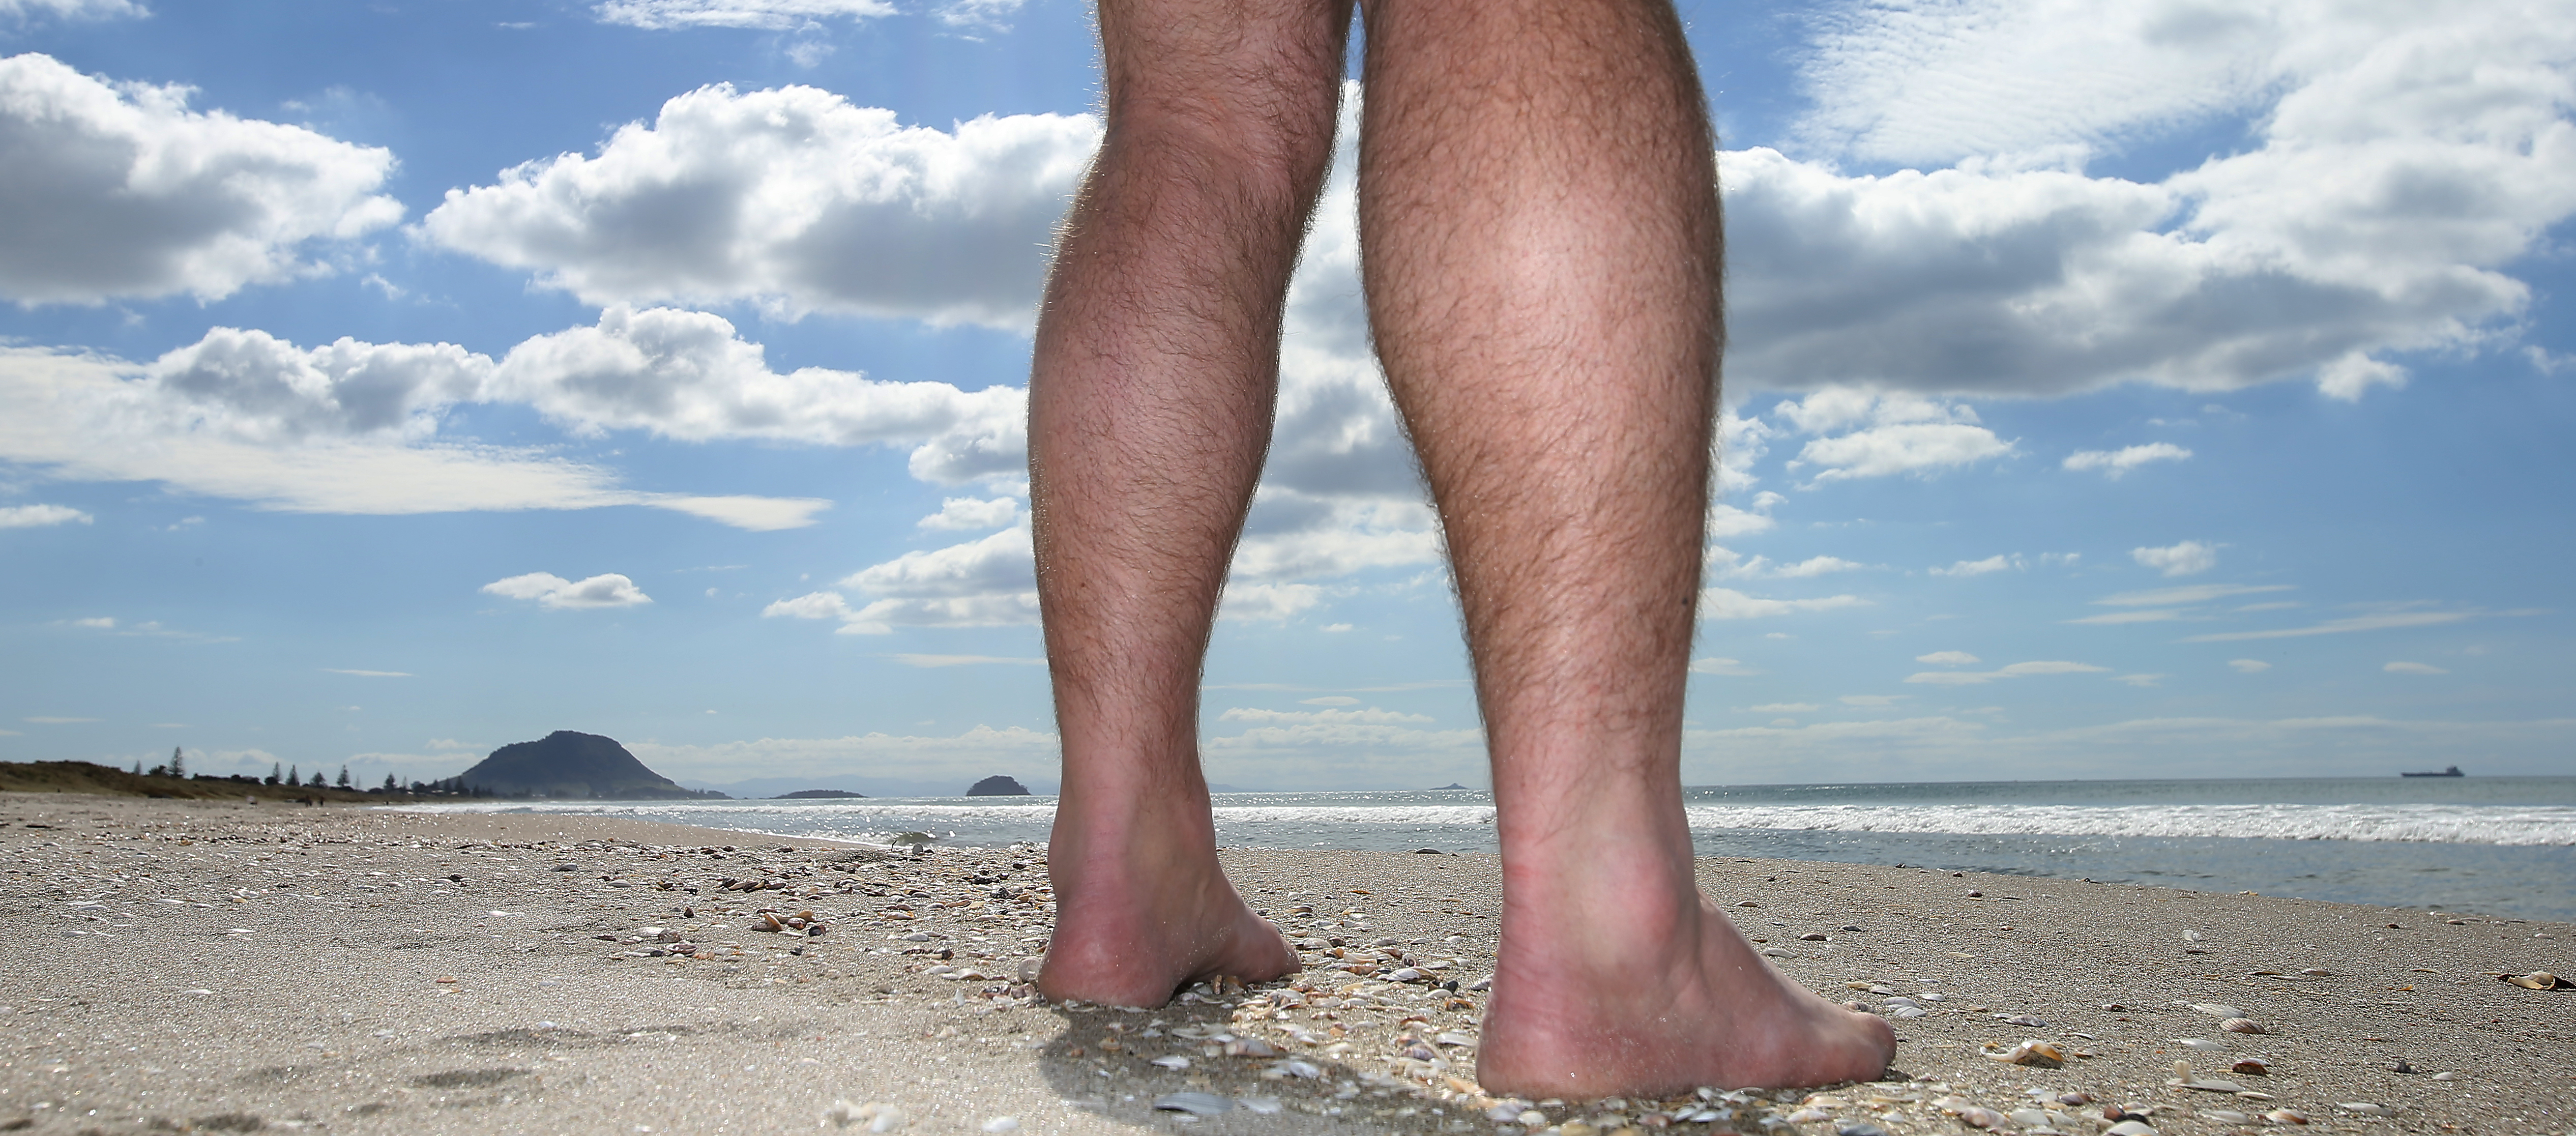 Chubby Nudist Beach Topless - Battle for the beach: Nudists clash with Papamoa beachgoers - NZ Herald